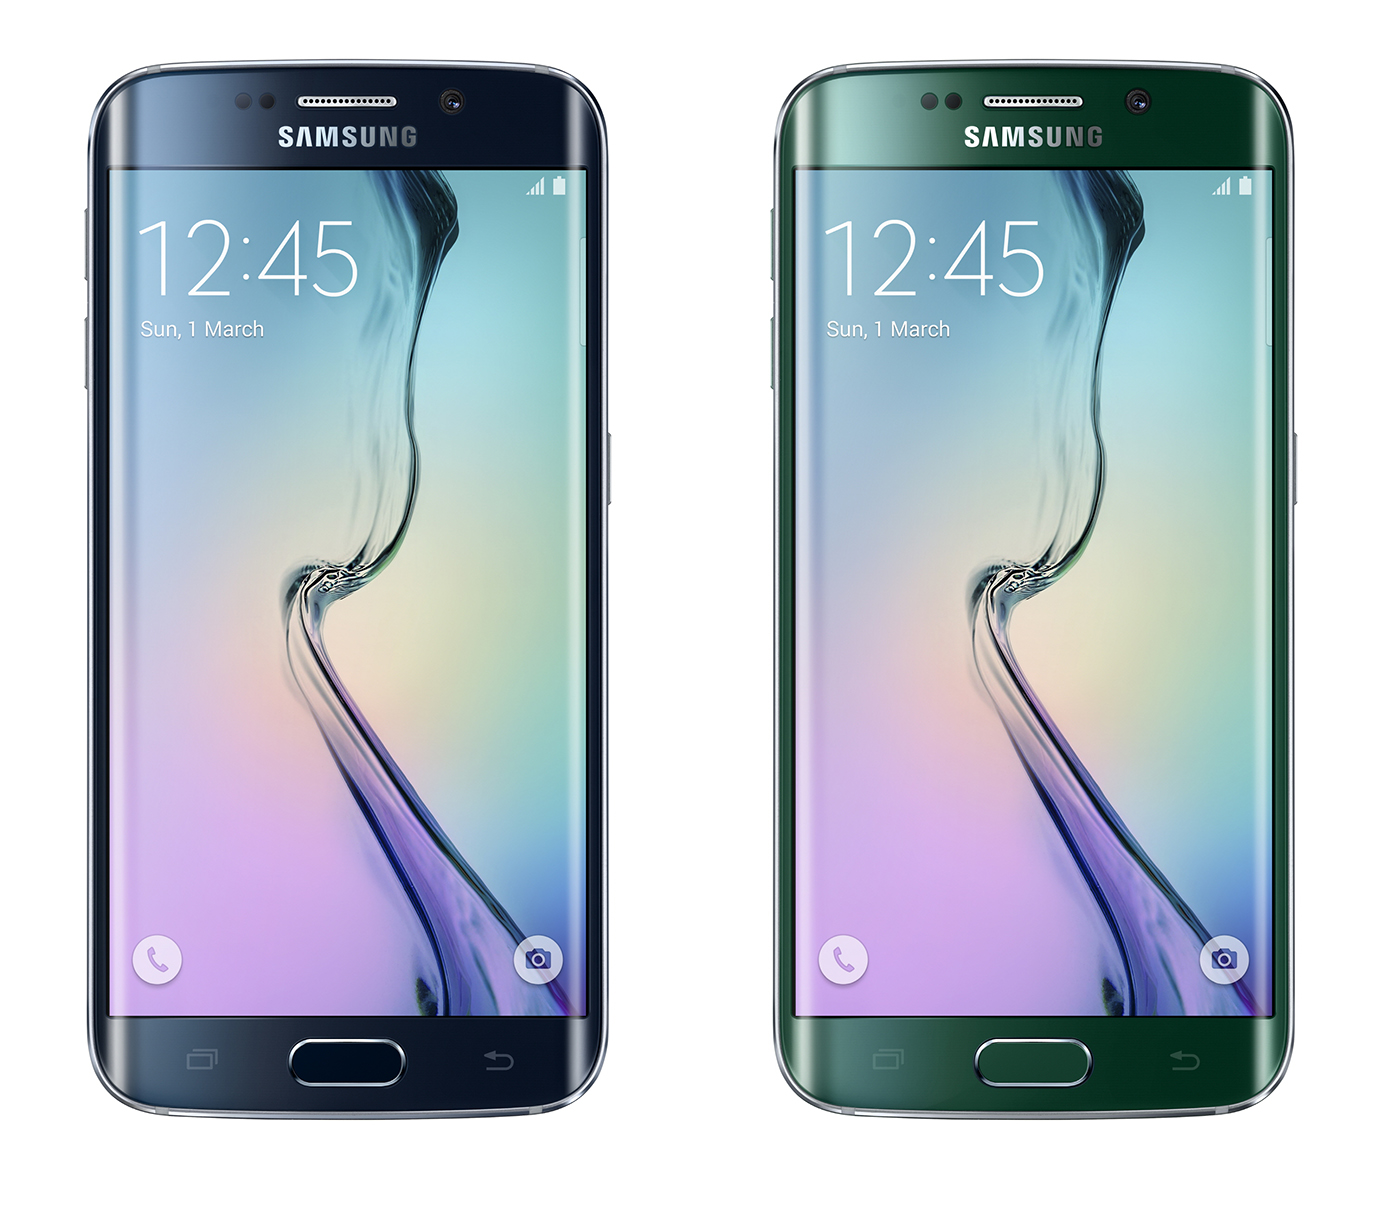 Samsung Galaxy S6 edge